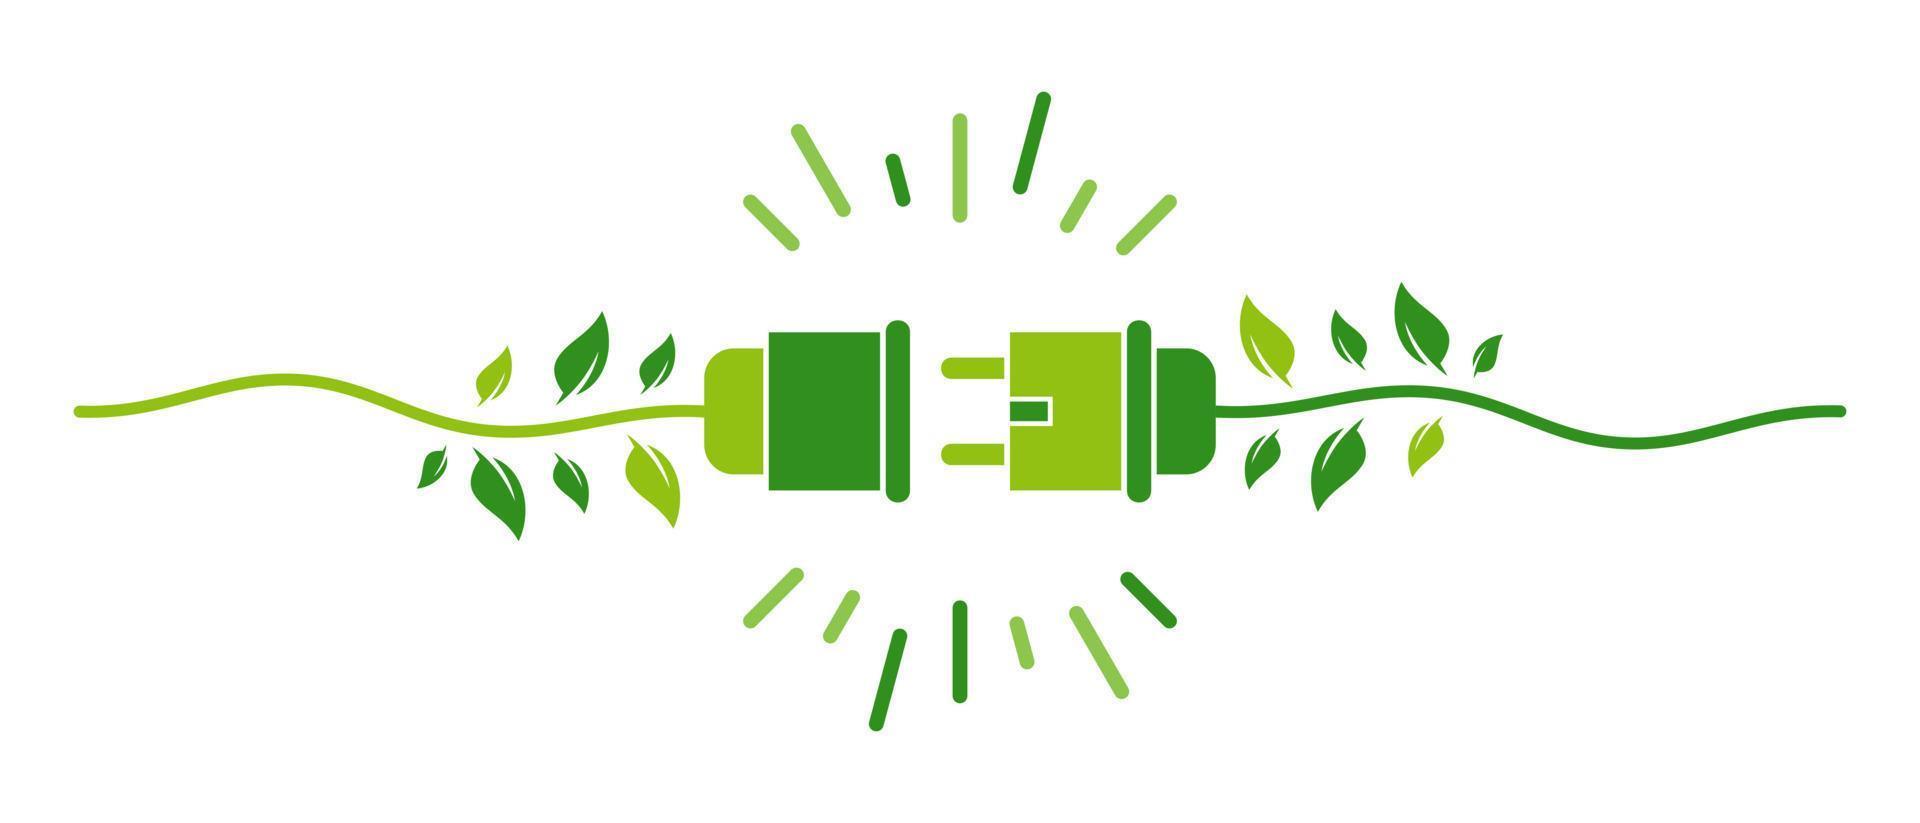 groene energie elektriciteit, stekker pictogram bord met kabel en blad vectorillustratie vector